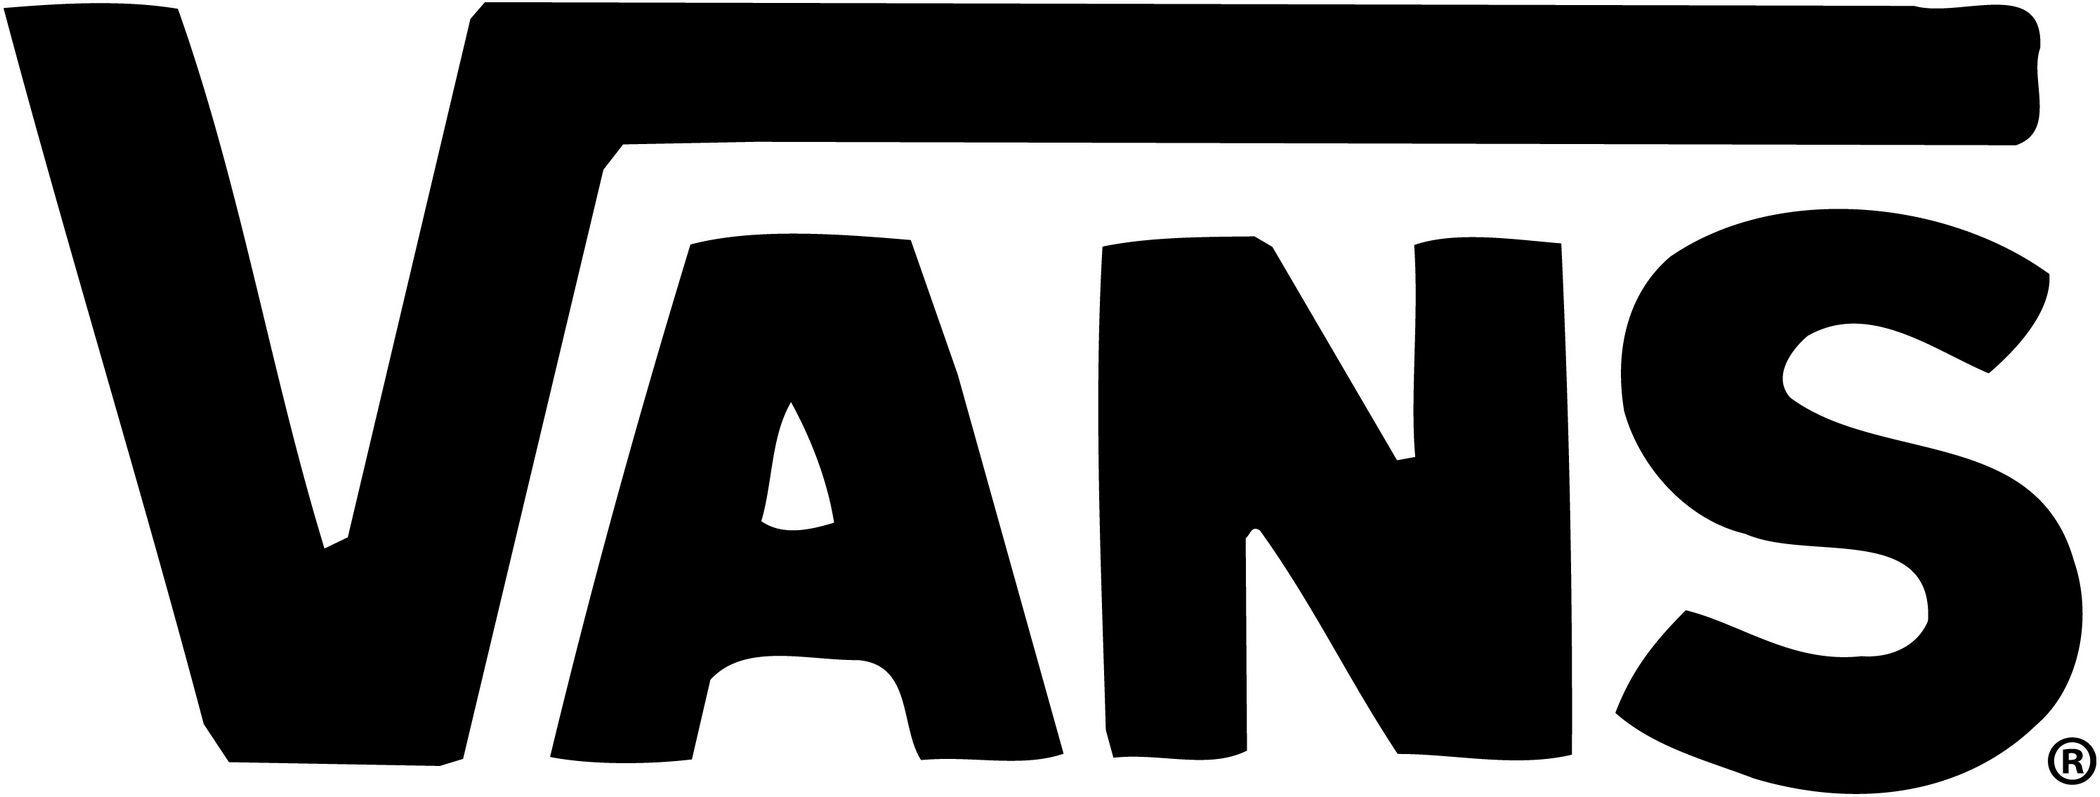 Vans Shoes Logo - Vans Logo | icon www | Vans logo, Vans, Logos